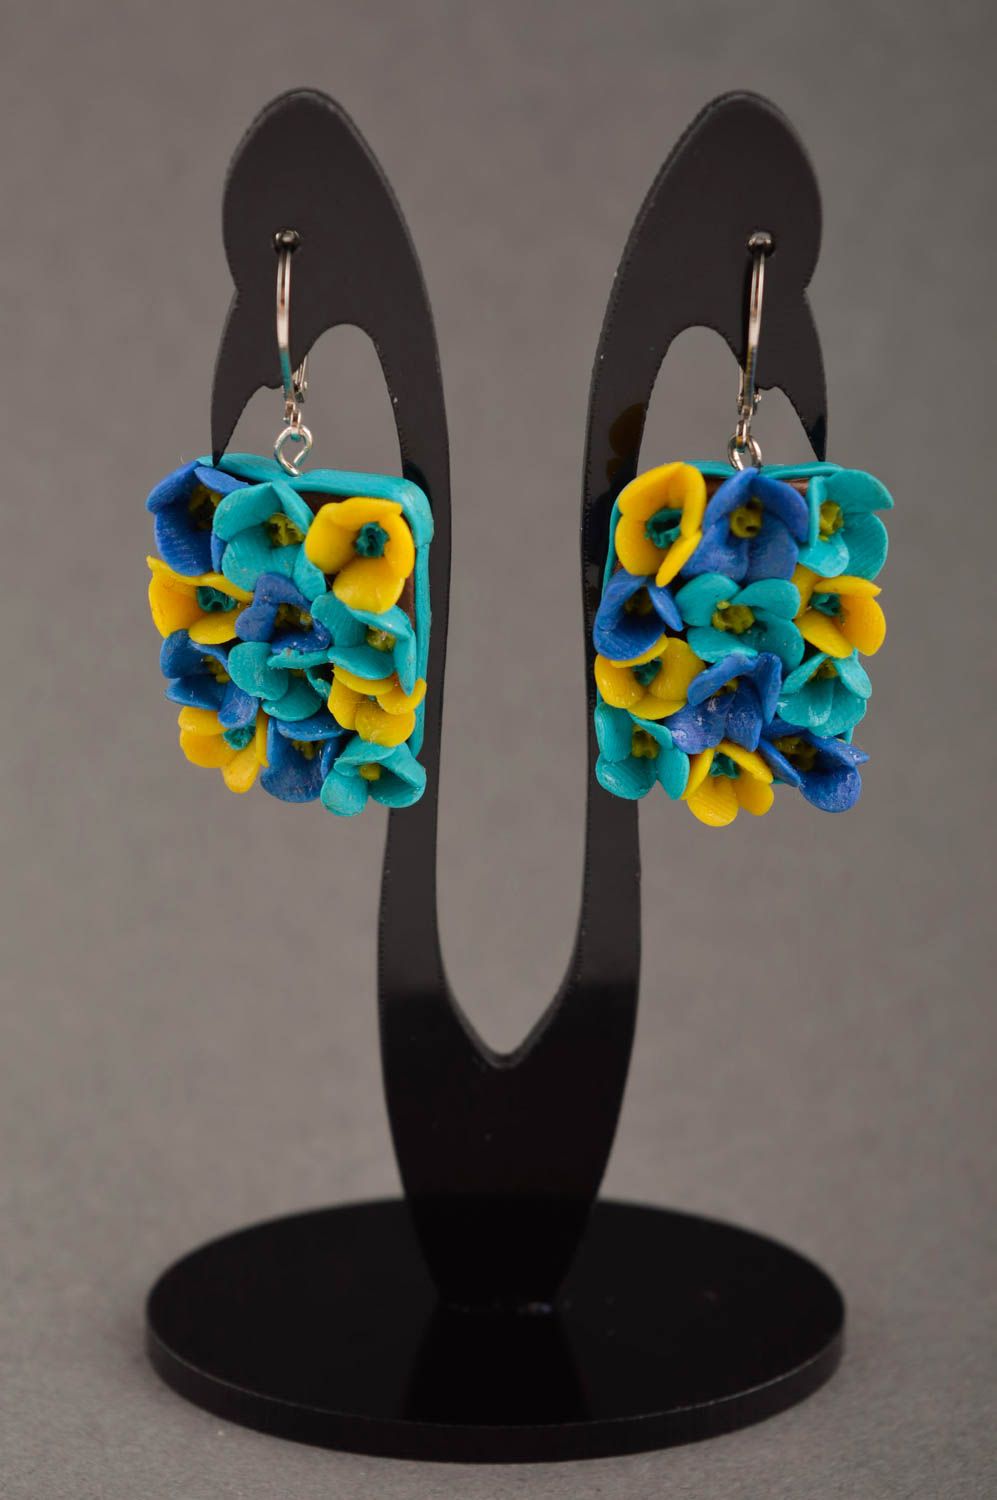 Handmade earrings designer clay earrings flowers earrings for women gift ideas photo 1